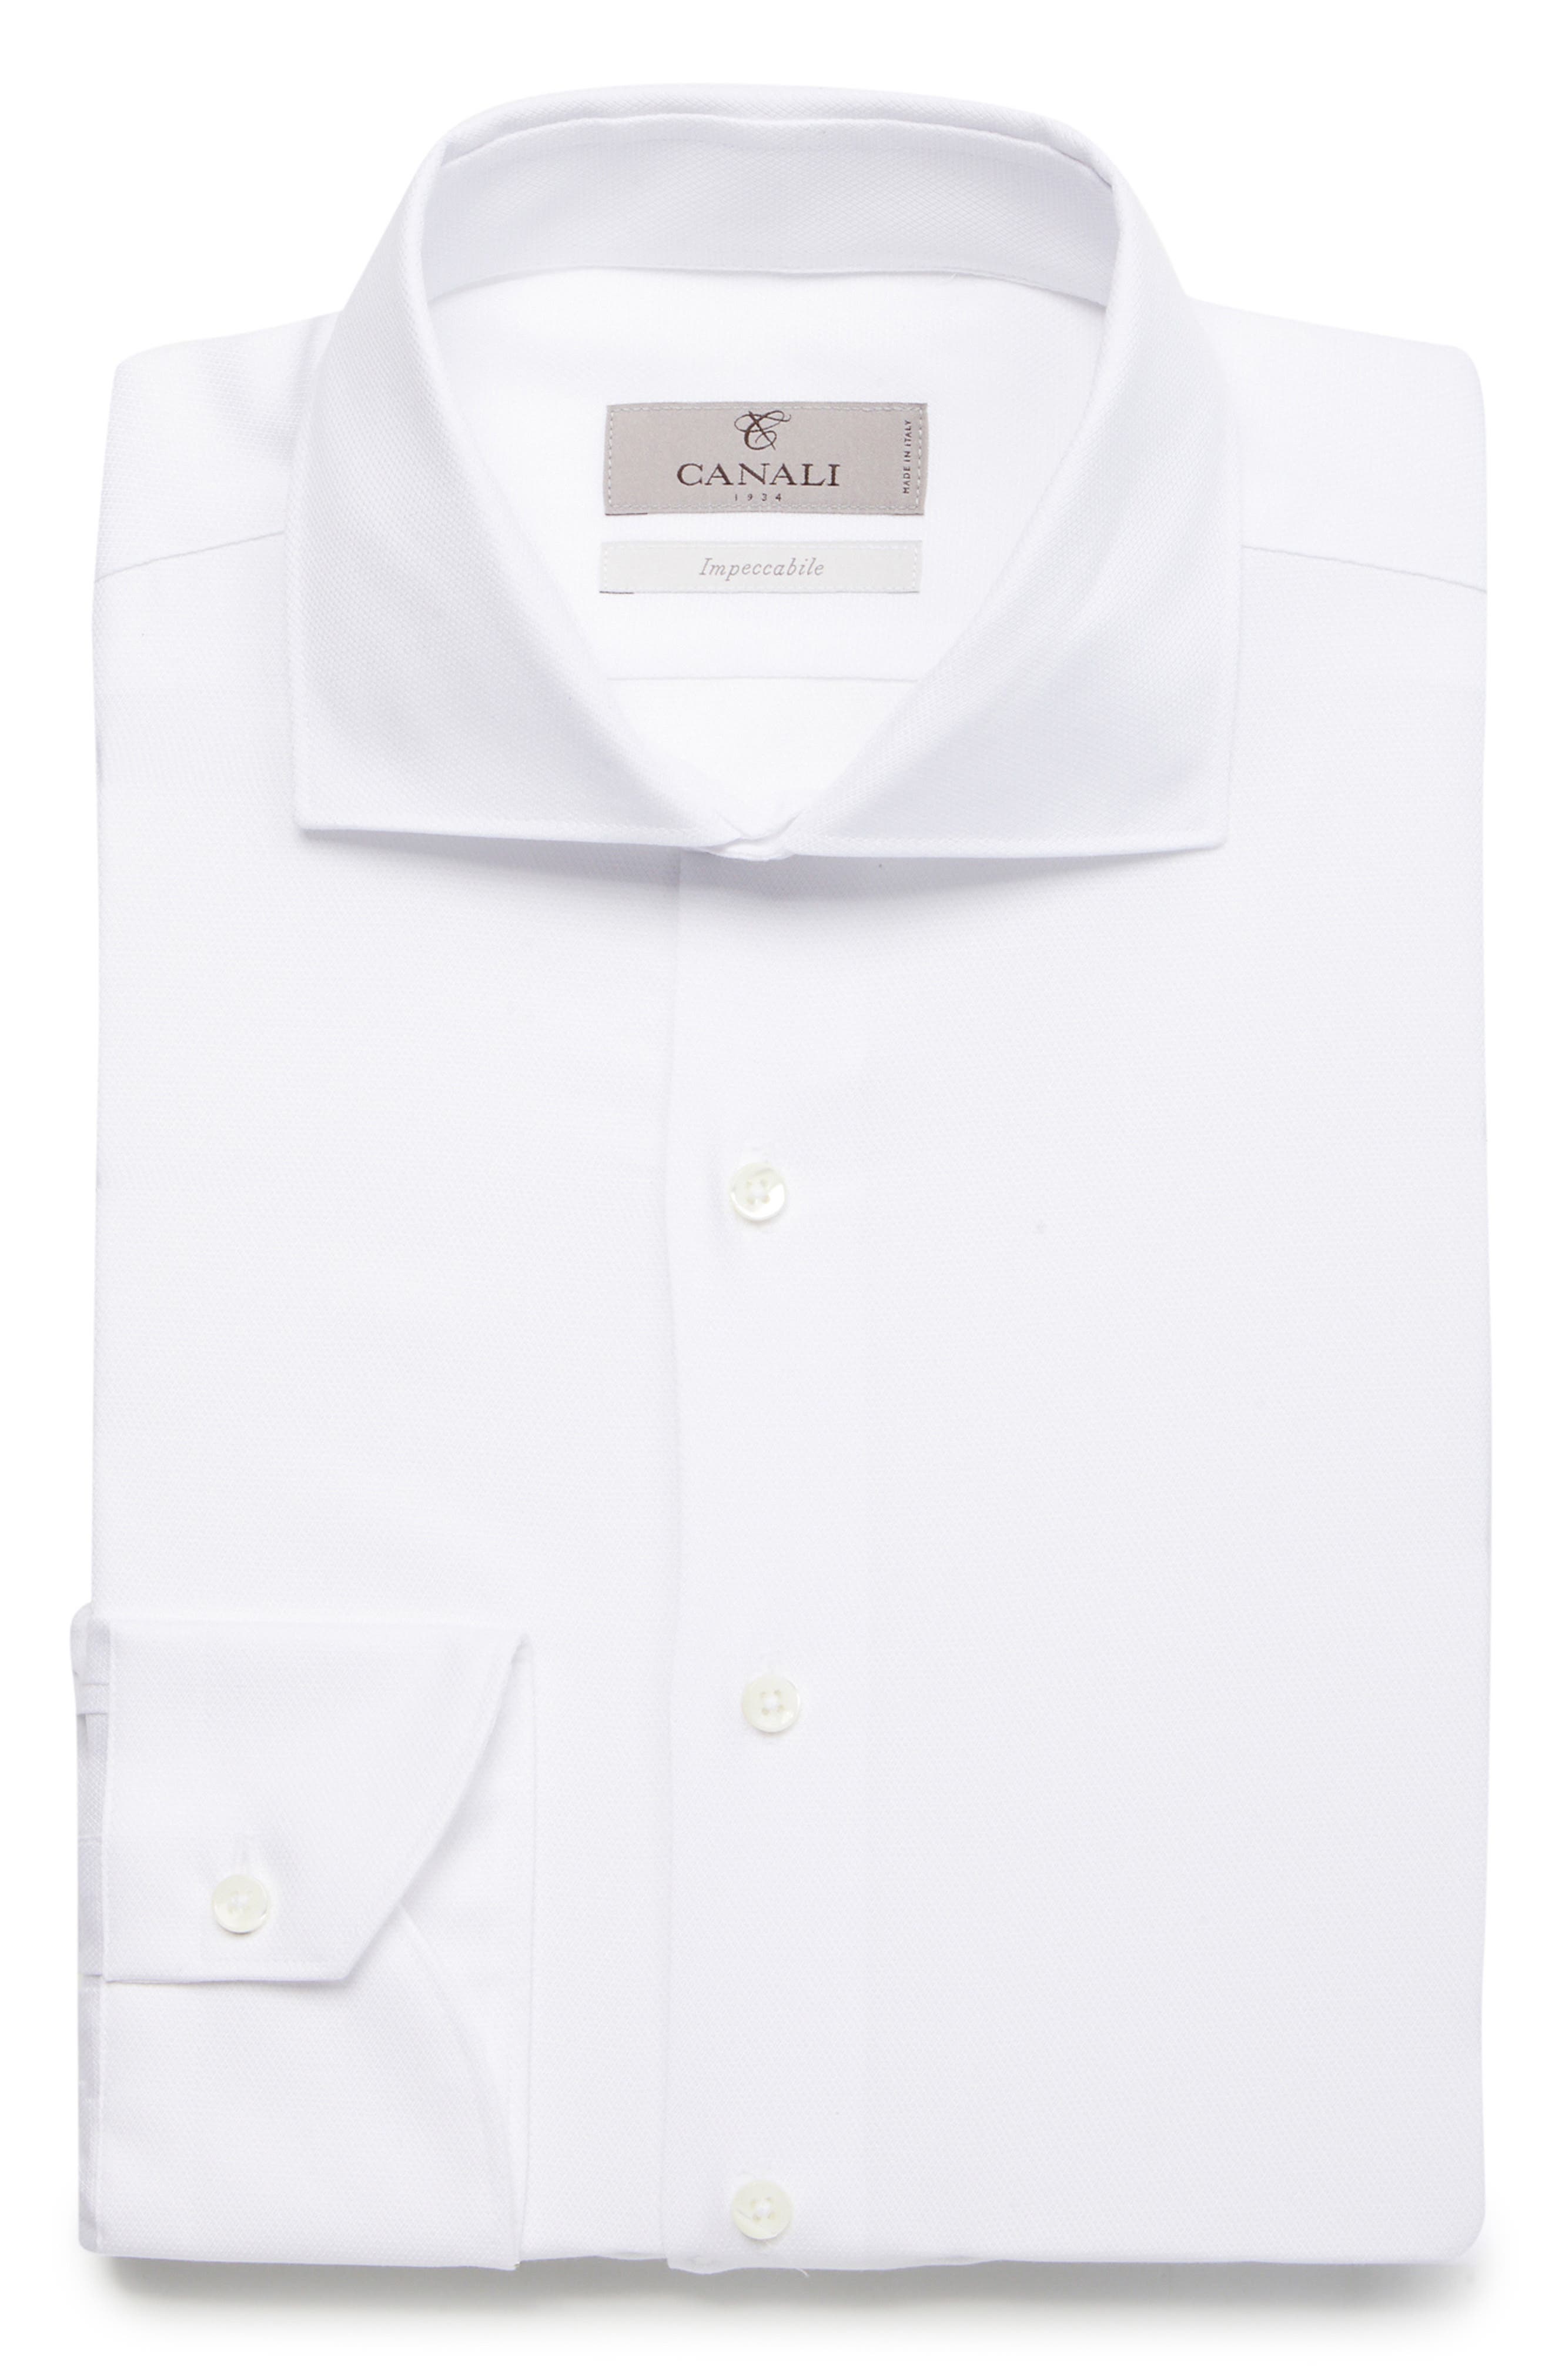 Canali Impeccabile Dress Shirt in White